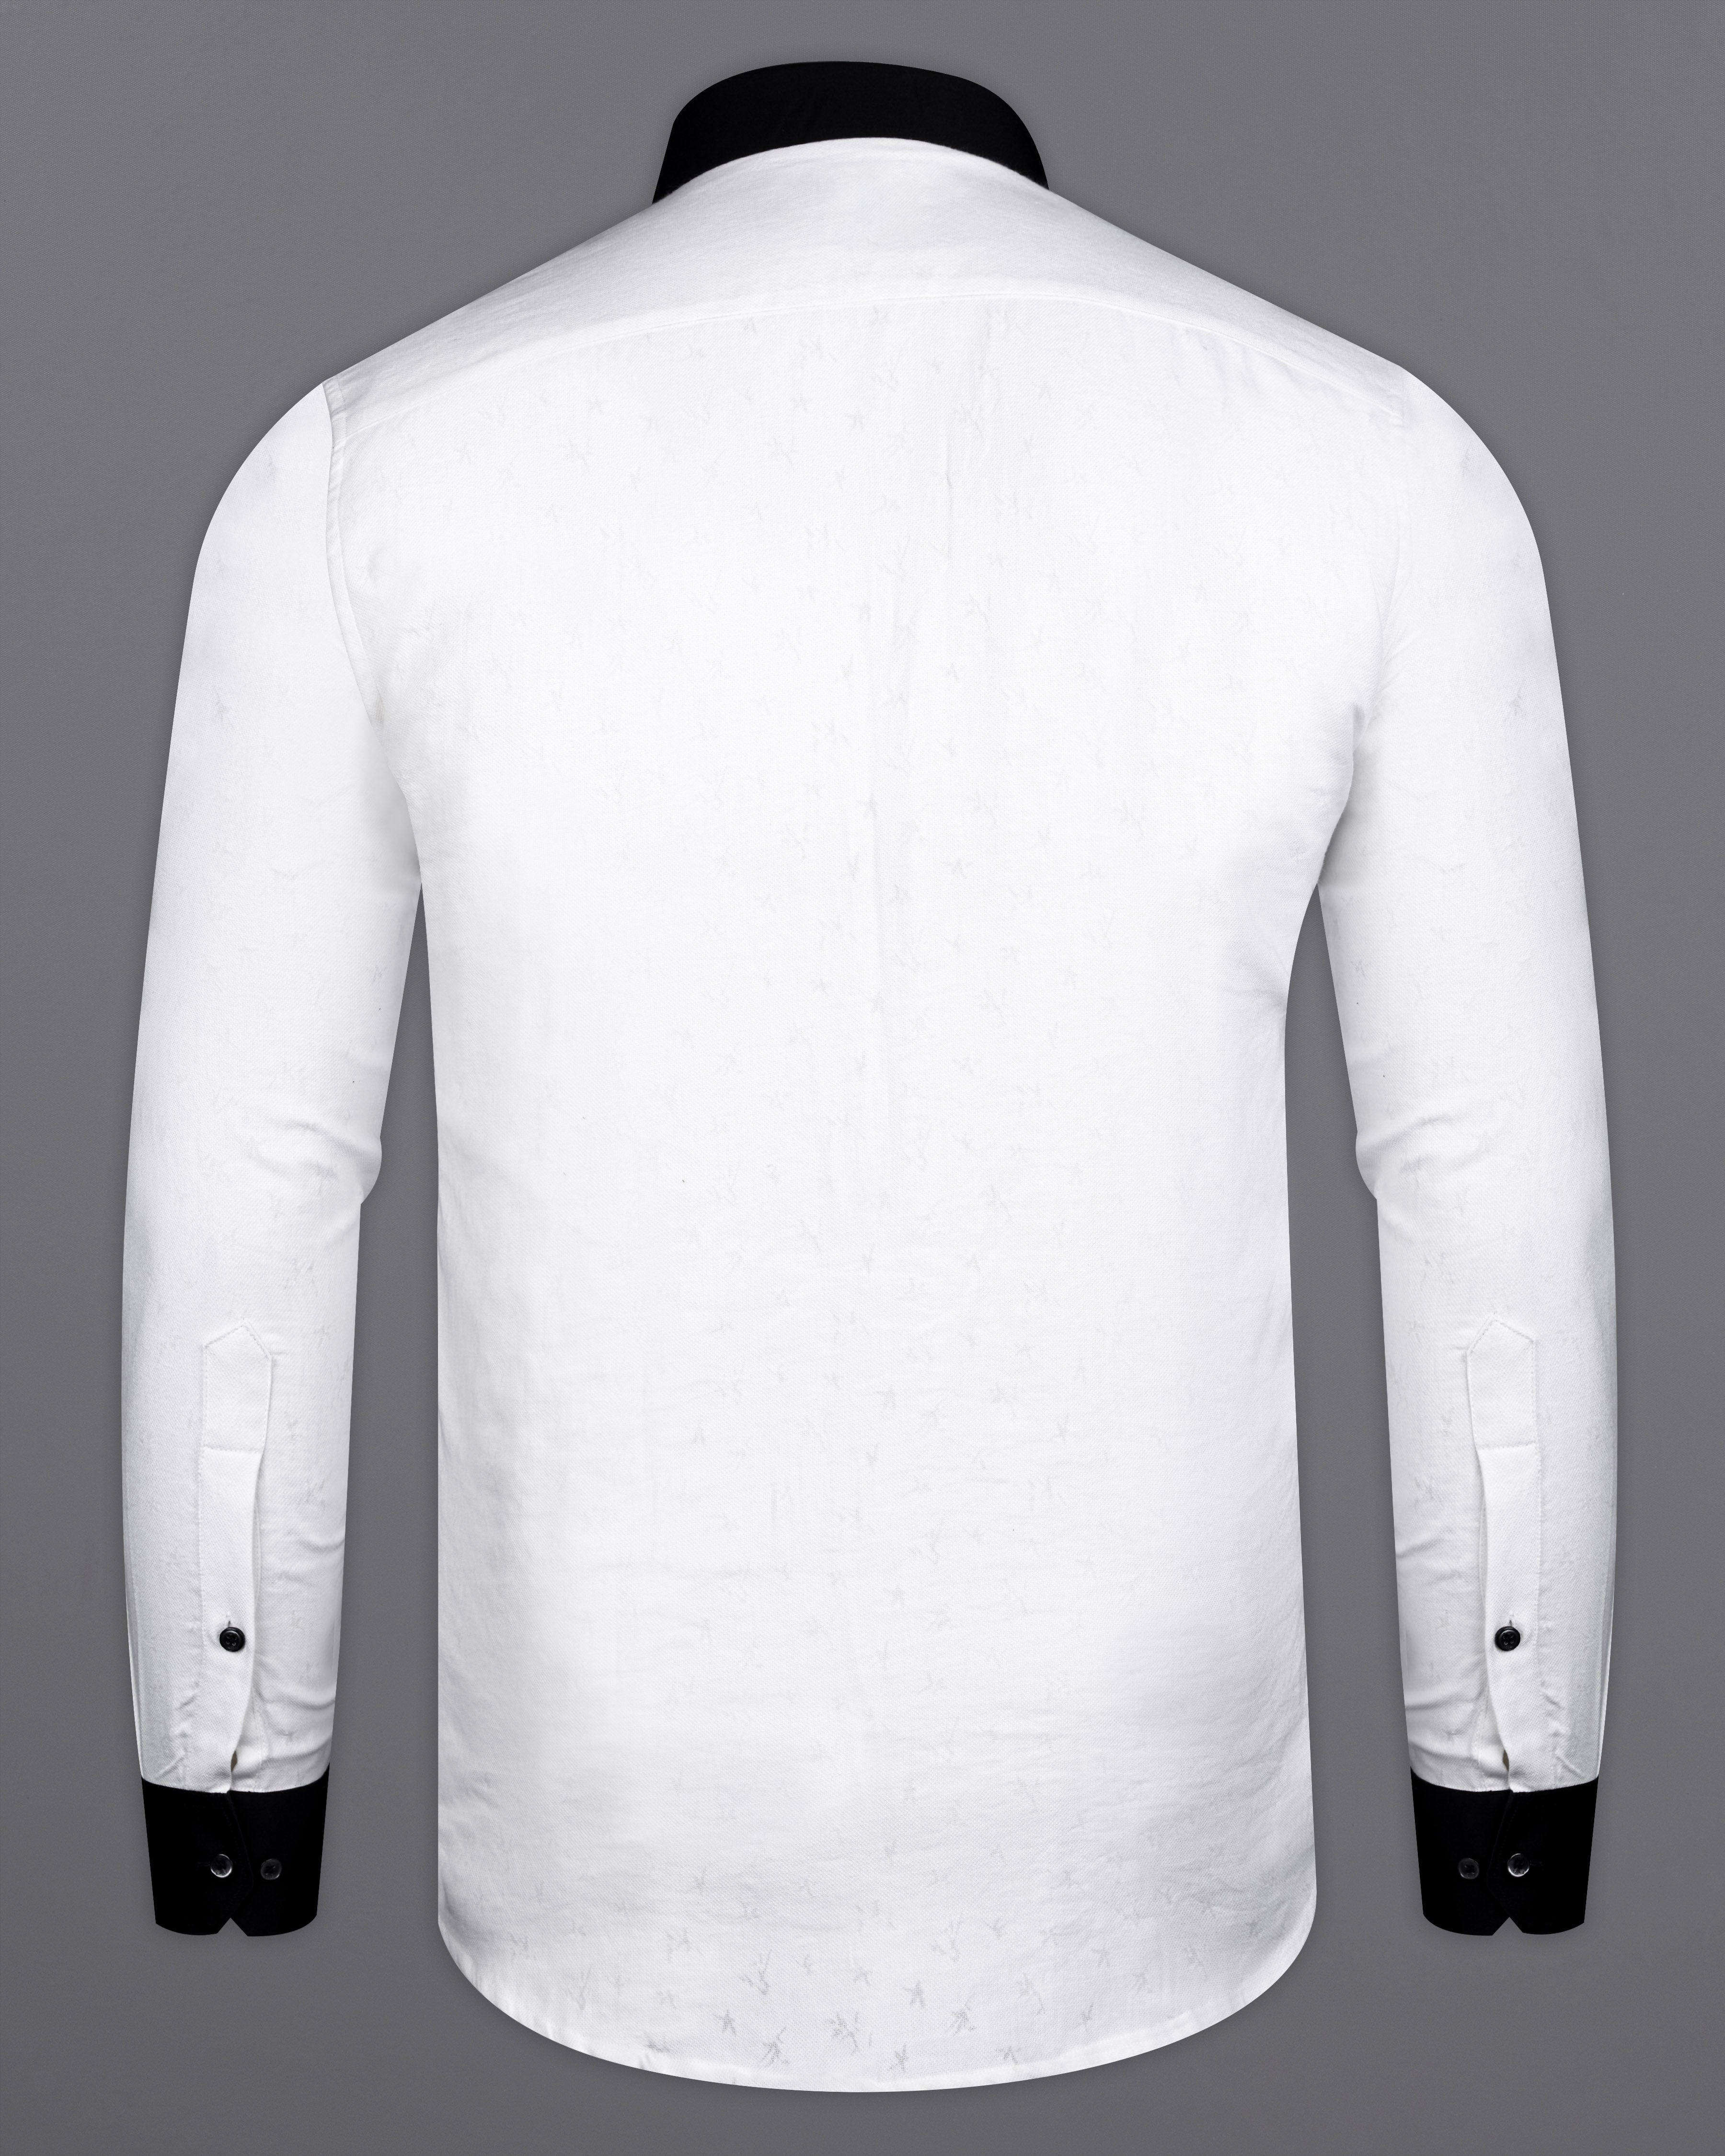 Bright White Jacquard Textured Premium Giza Cotton Shirt with Black Collar and Cuffs 9876-BCC-BLK-38, 9876-BCC-BLK-H-38, 9876-BCC-BLK-39, 9876-BCC-BLK-H-39, 9876-BCC-BLK-40, 9876-BCC-BLK-H-40, 9876-BCC-BLK-42, 9876-BCC-BLK-H-42, 9876-BCC-BLK-44, 9876-BCC-BLK-H-44, 9876-BCC-BLK-46, 9876-BCC-BLK-H-46, 9876-BCC-BLK-48, 9876-BCC-BLK-H-48, 9876-BCC-BLK-50, 9876-BCC-BLK-H-50, 9876-BCC-BLK-52, 9876-BCC-BLK-H-52